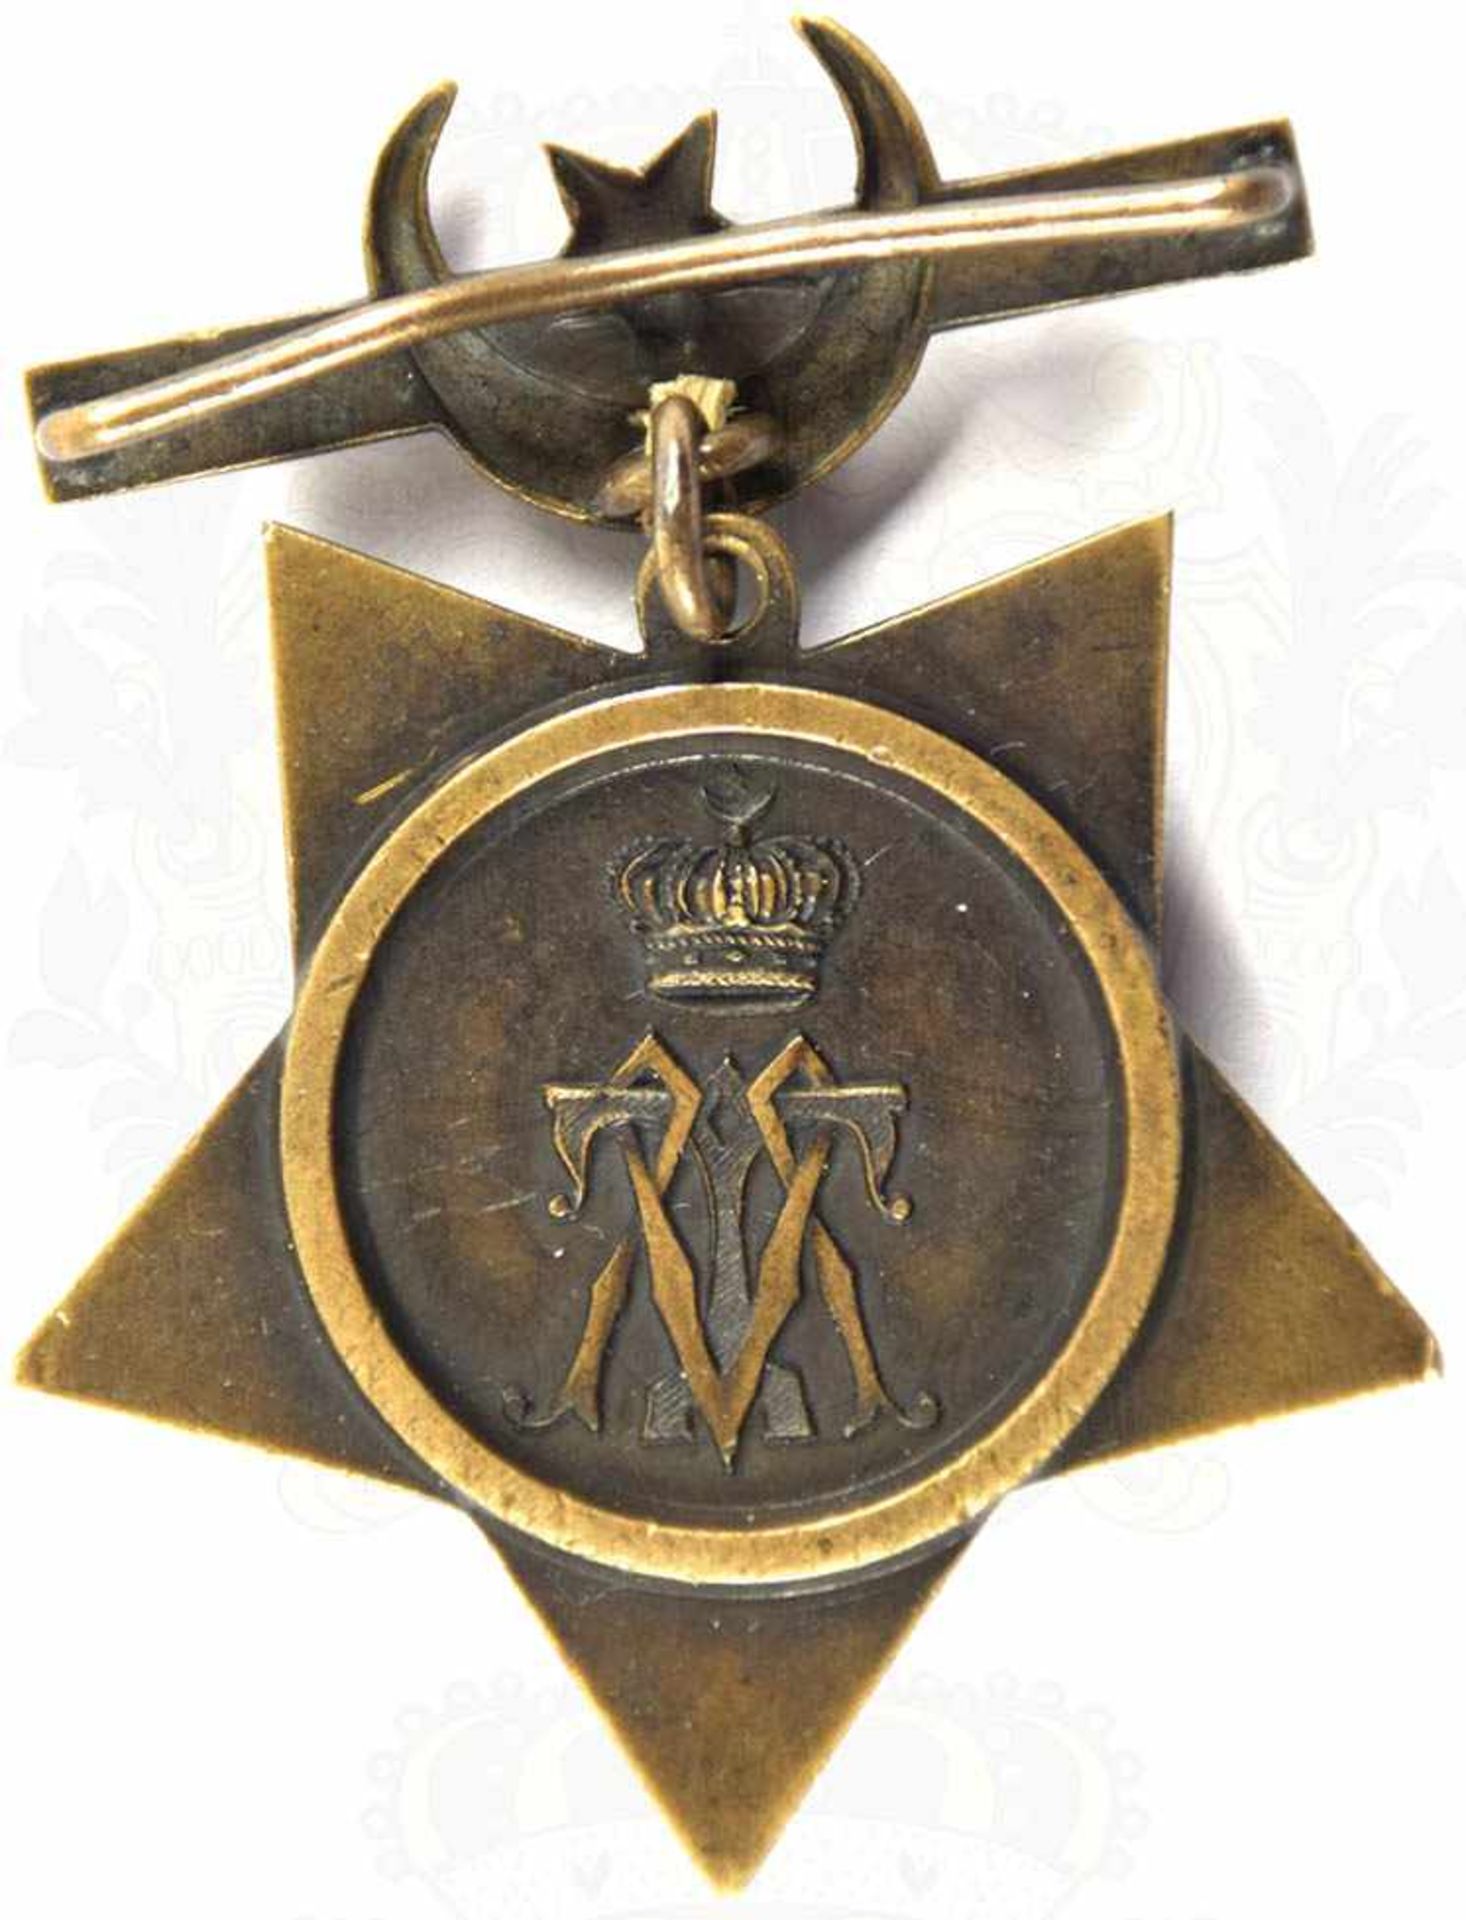 KHEDIVE STAR MEDAL f. den brit. Feldzug in Ägypten 1884 gegen den Mahdi-Aufstand, Bronze, patiniert, - Image 2 of 2